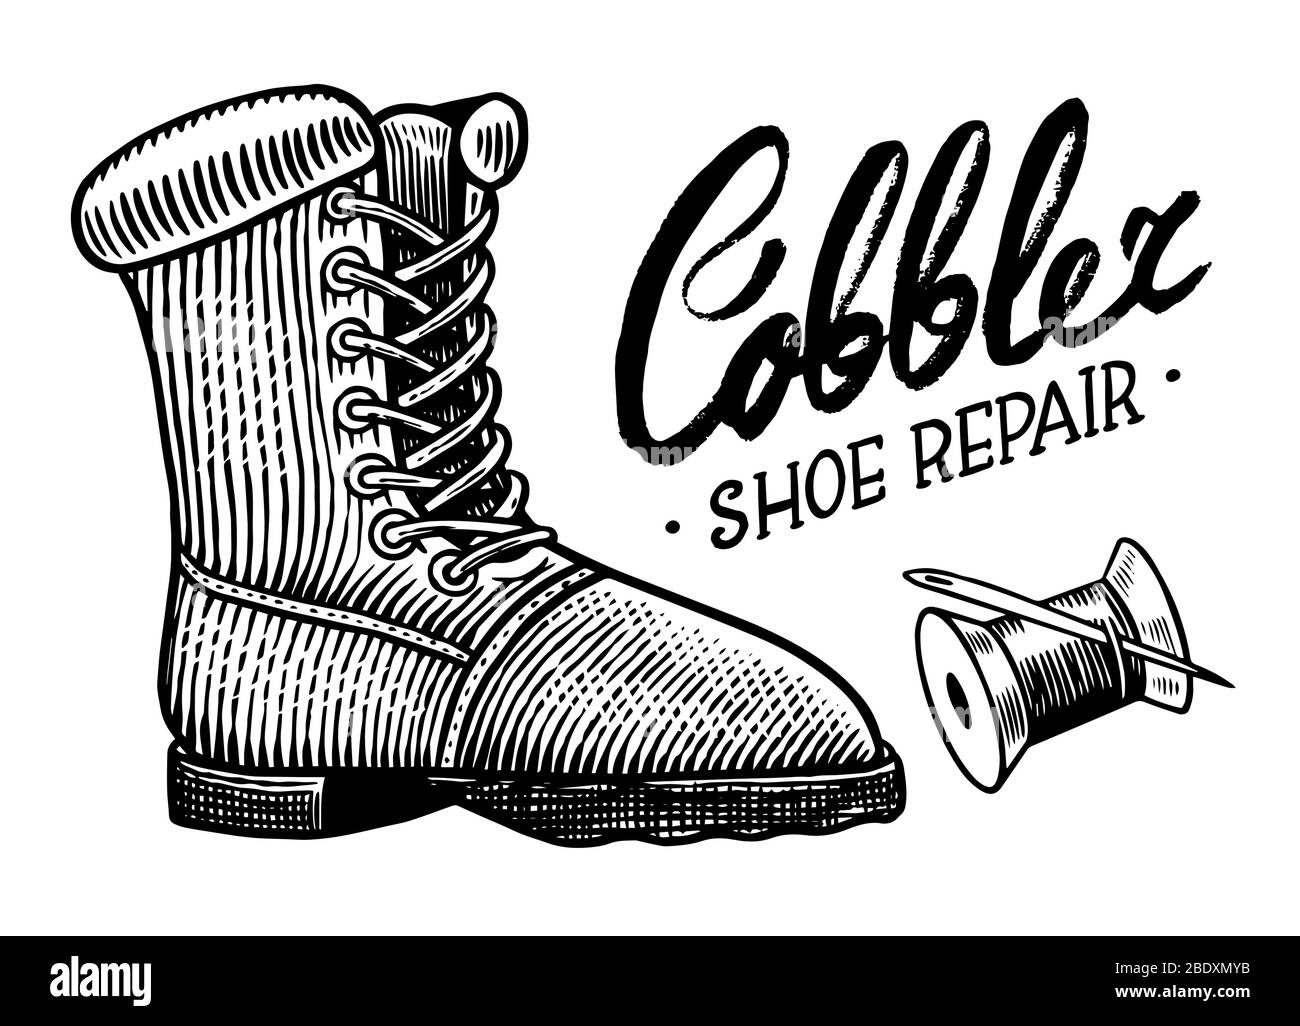 Shoe repair concept. Cobbler or shoemaker background. Vintage label. Hand drawn engraved sketch for T-shirt, logo or badges. Stock Vector